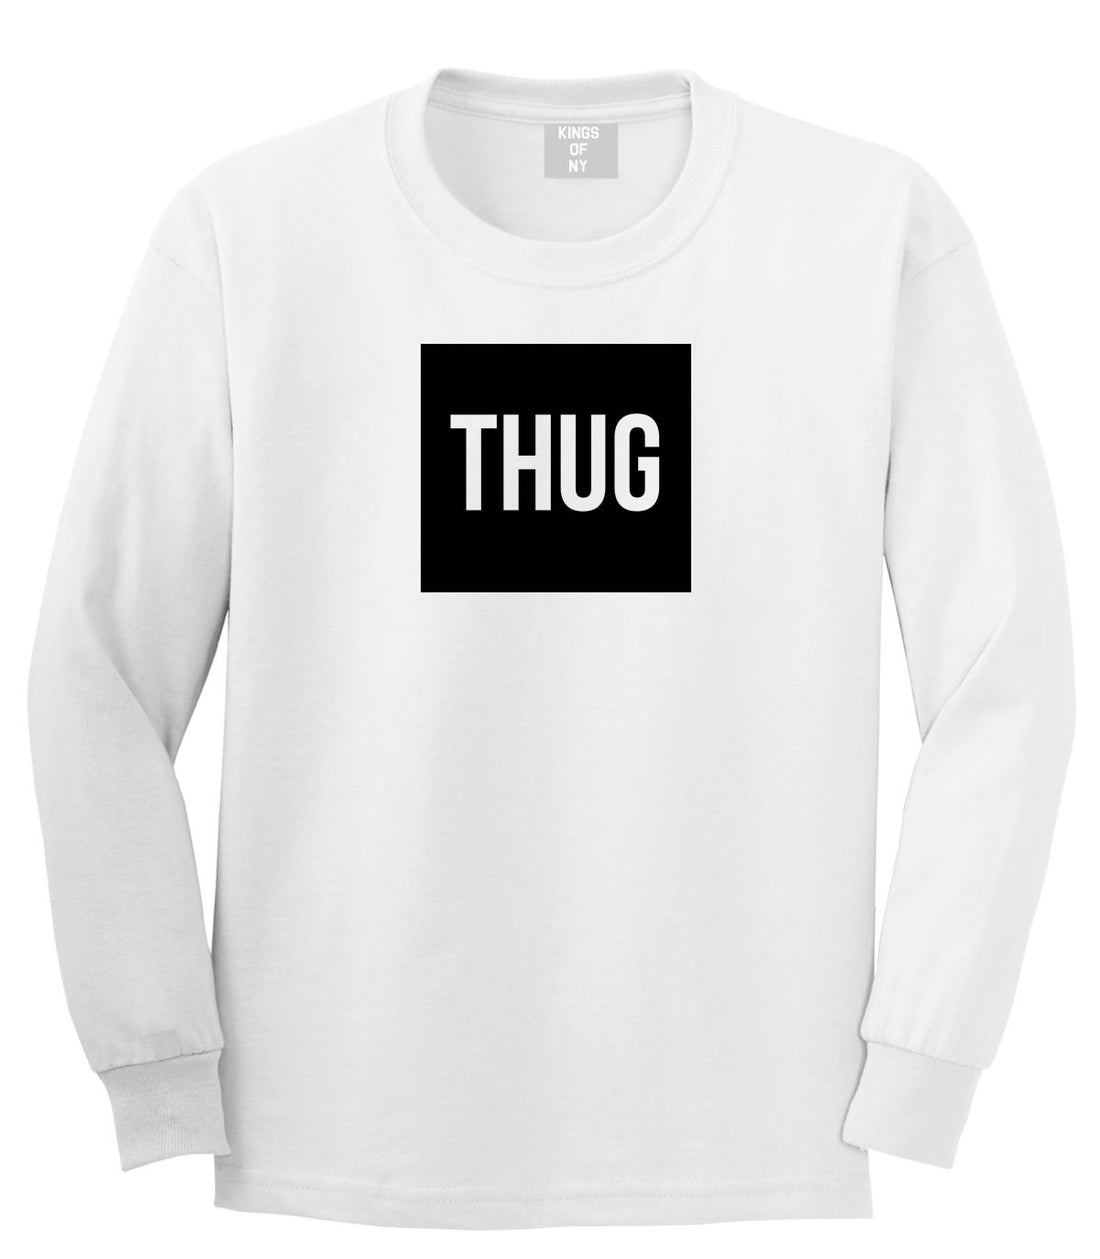 Thug Gangsta Box Logo Long Sleeve T-Shirt in White by Kings Of NY